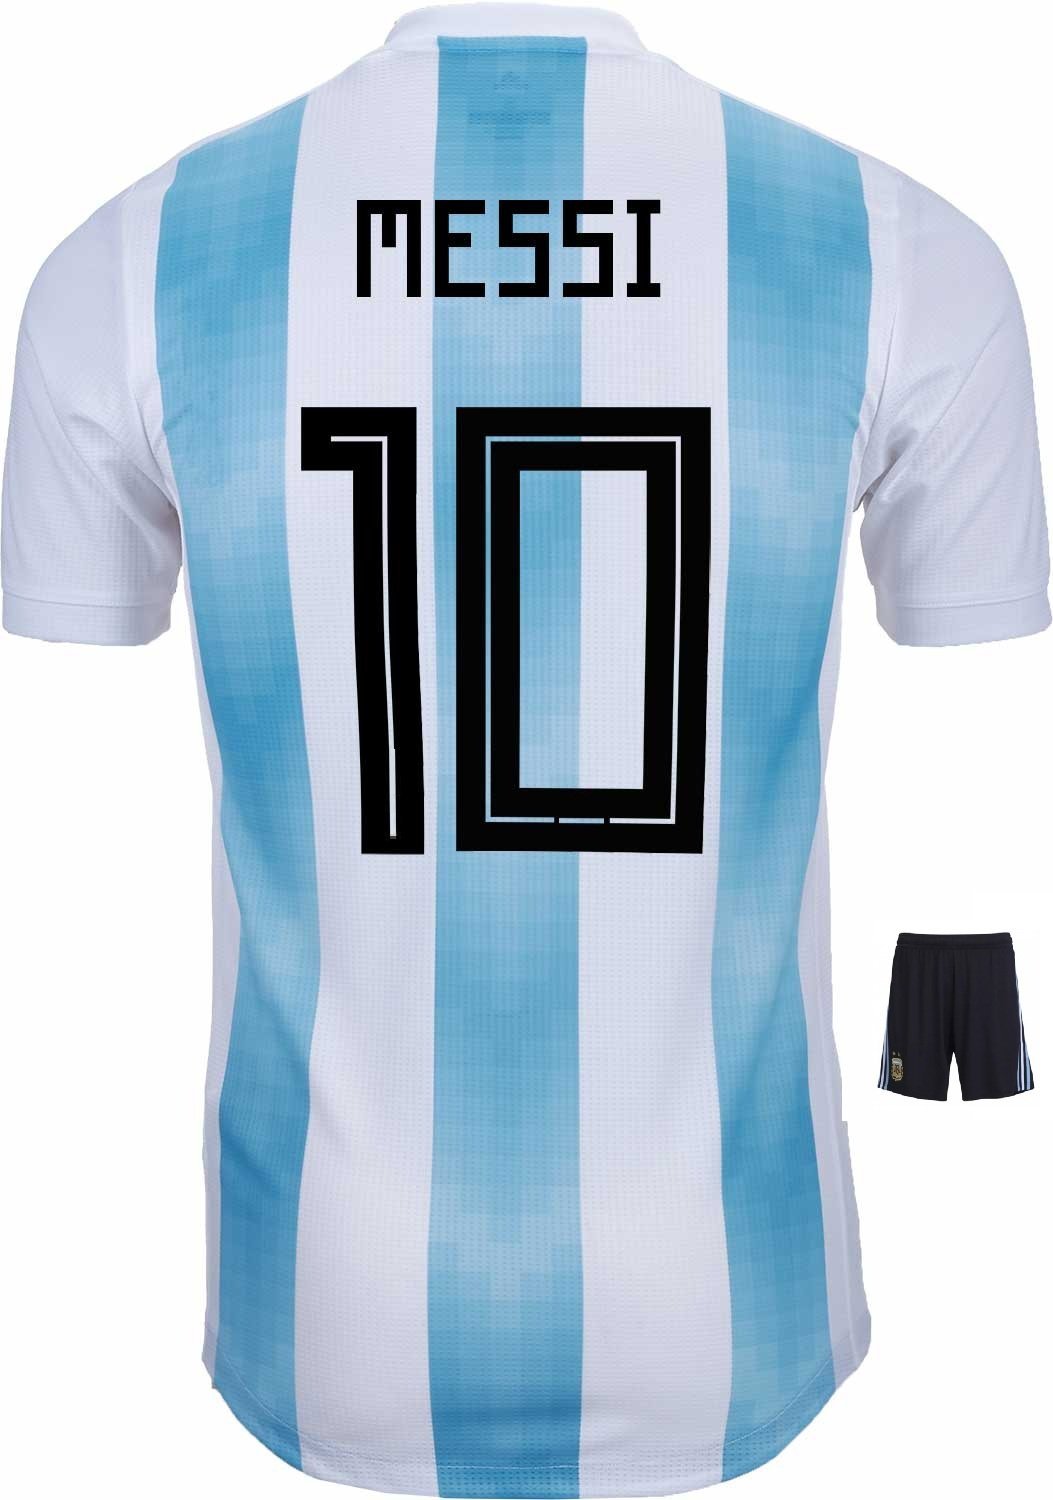 argentina jersey font